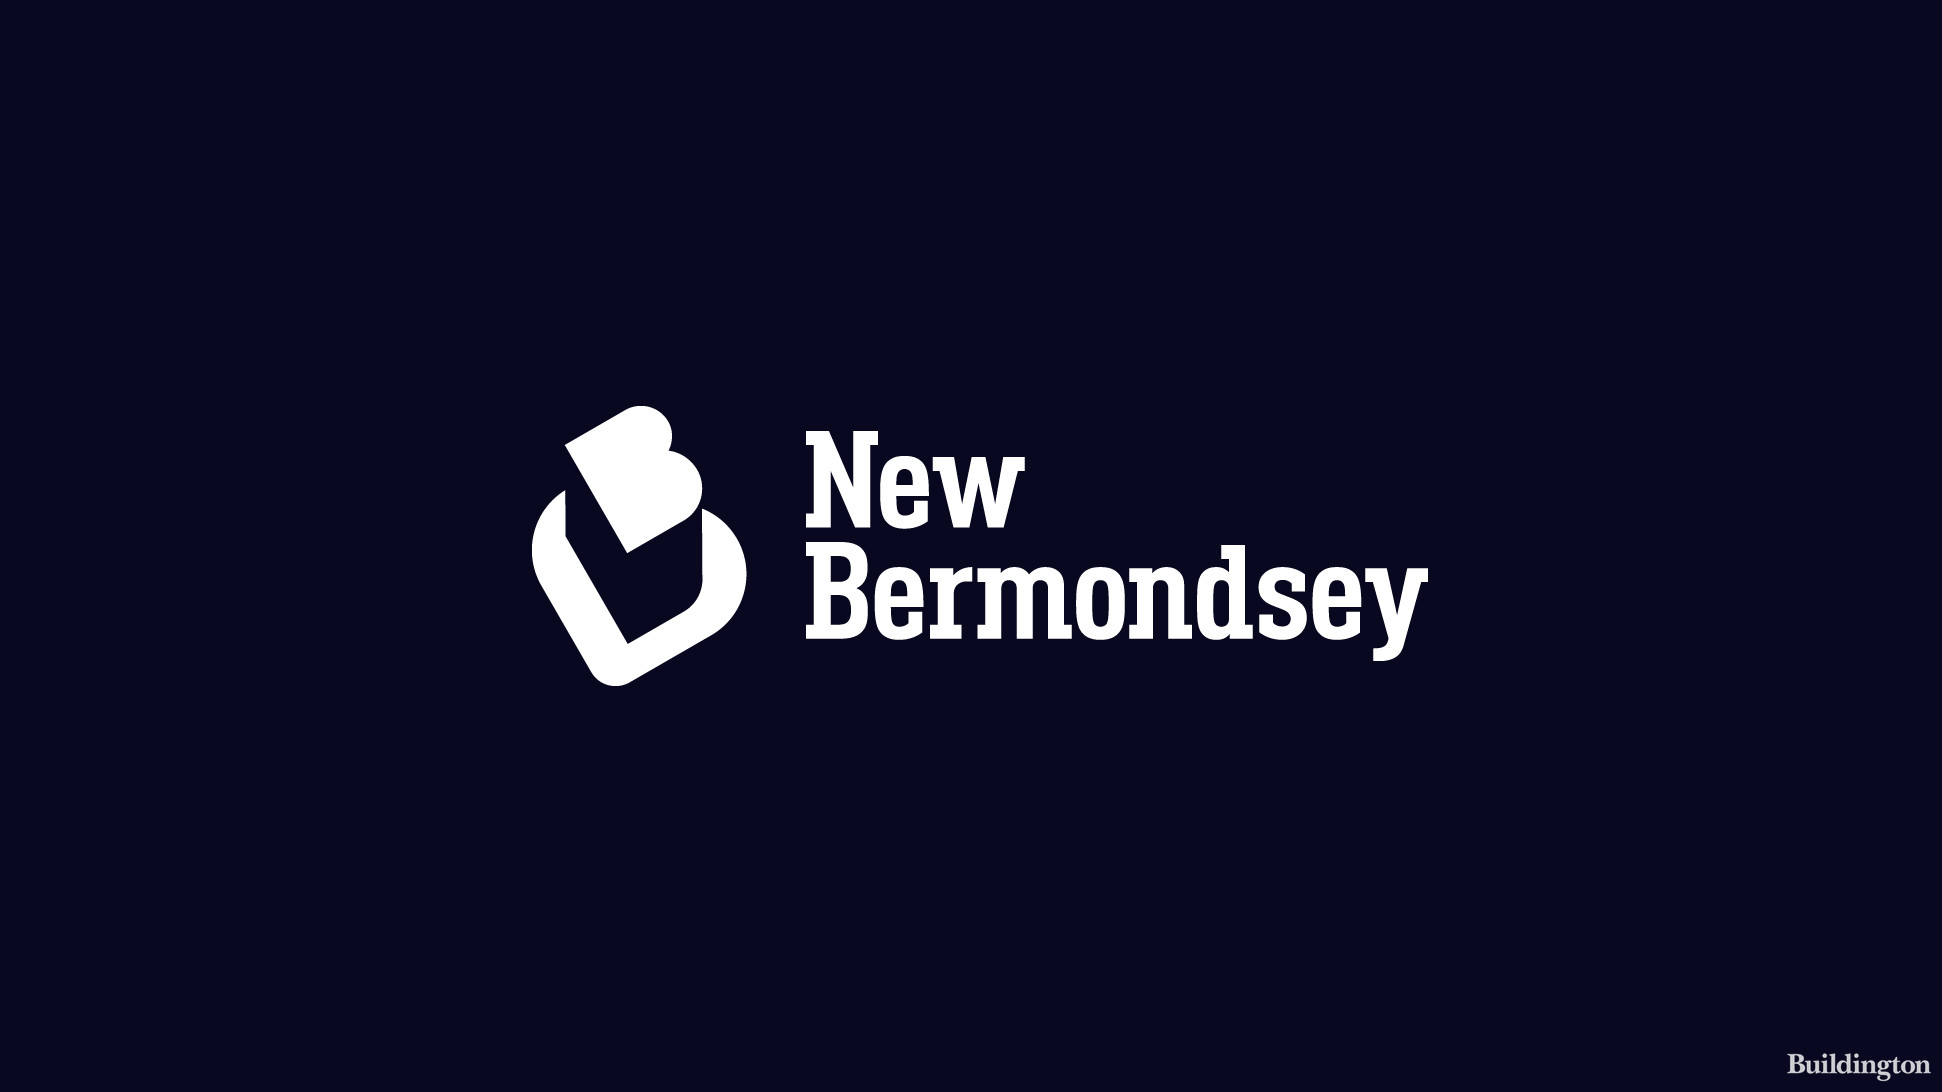 New Bermondsey development logo